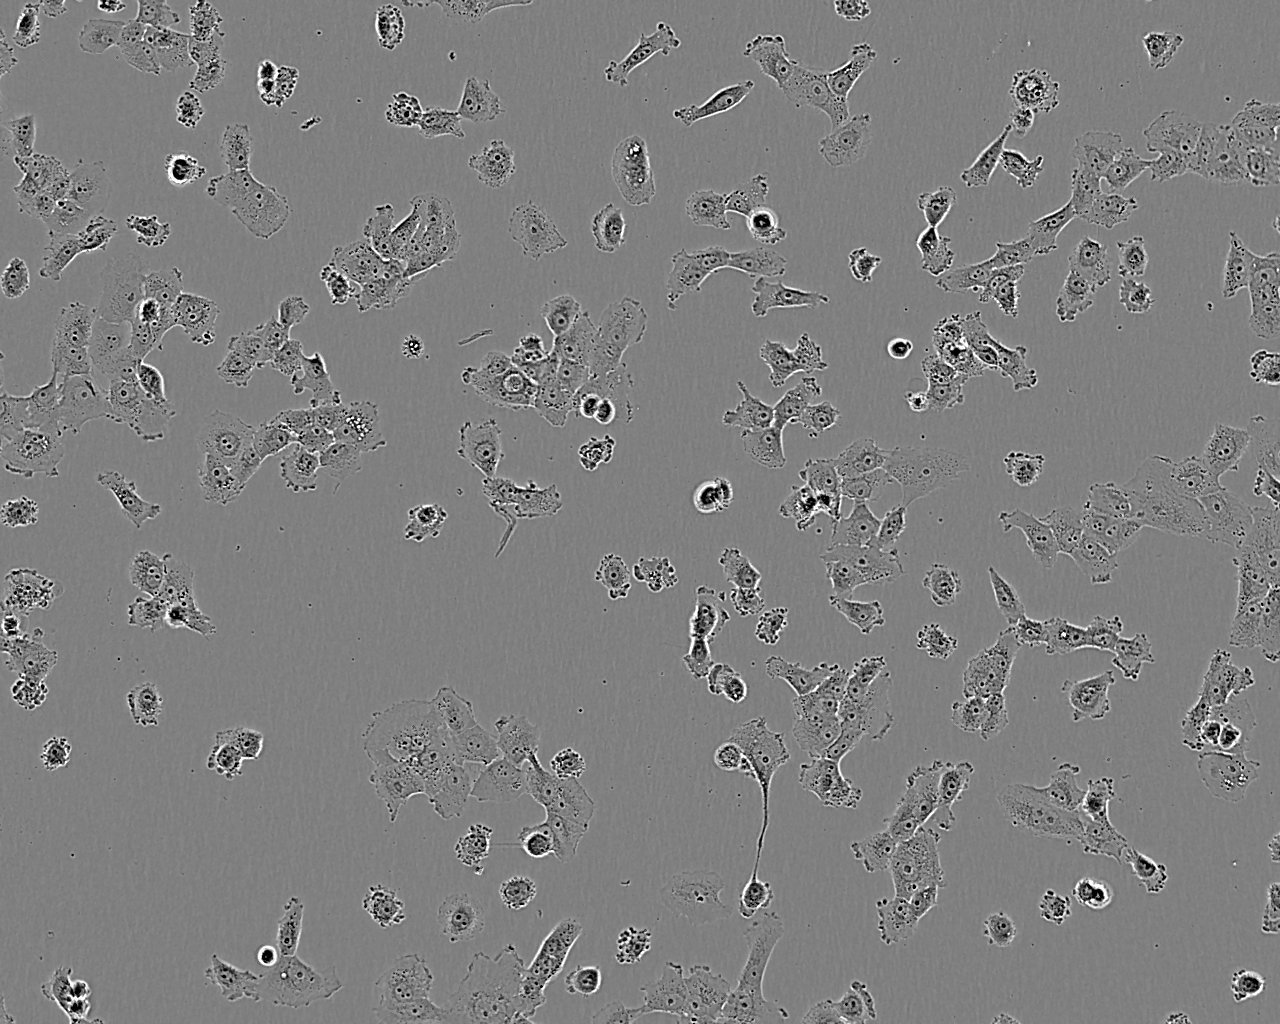 Hca-F epithelioid cells小鼠肝癌细胞系,Hca-F epithelioid cells